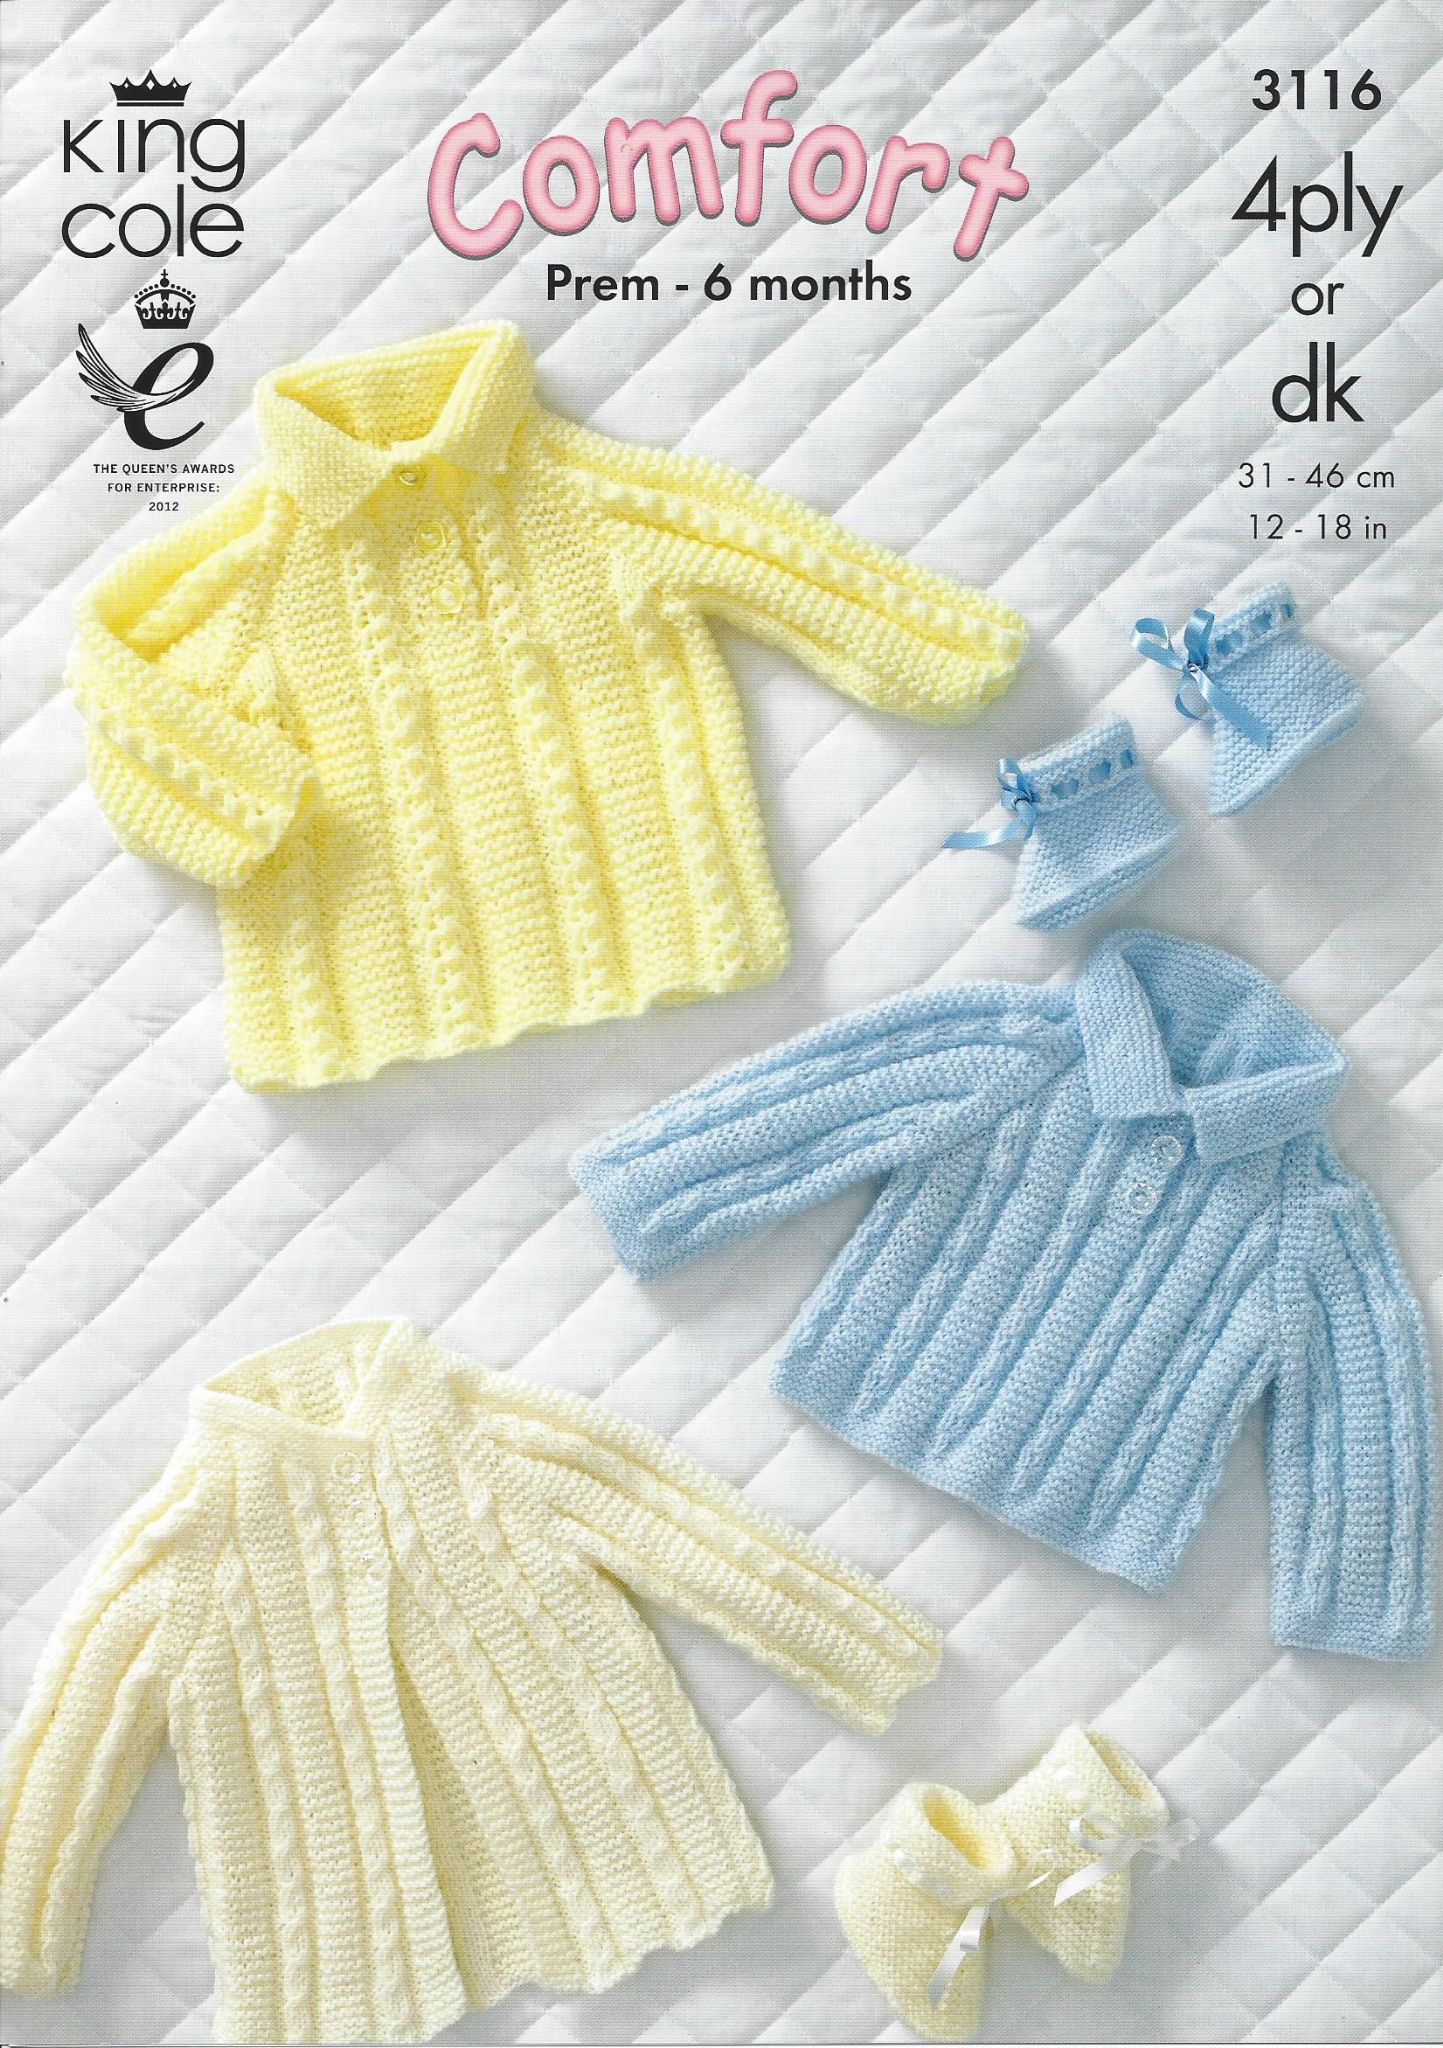 Dk Knitting Patterns King Cole Ba Dk 4ply Knitting Pattern 3116 Sweater Dress Coat Bootees